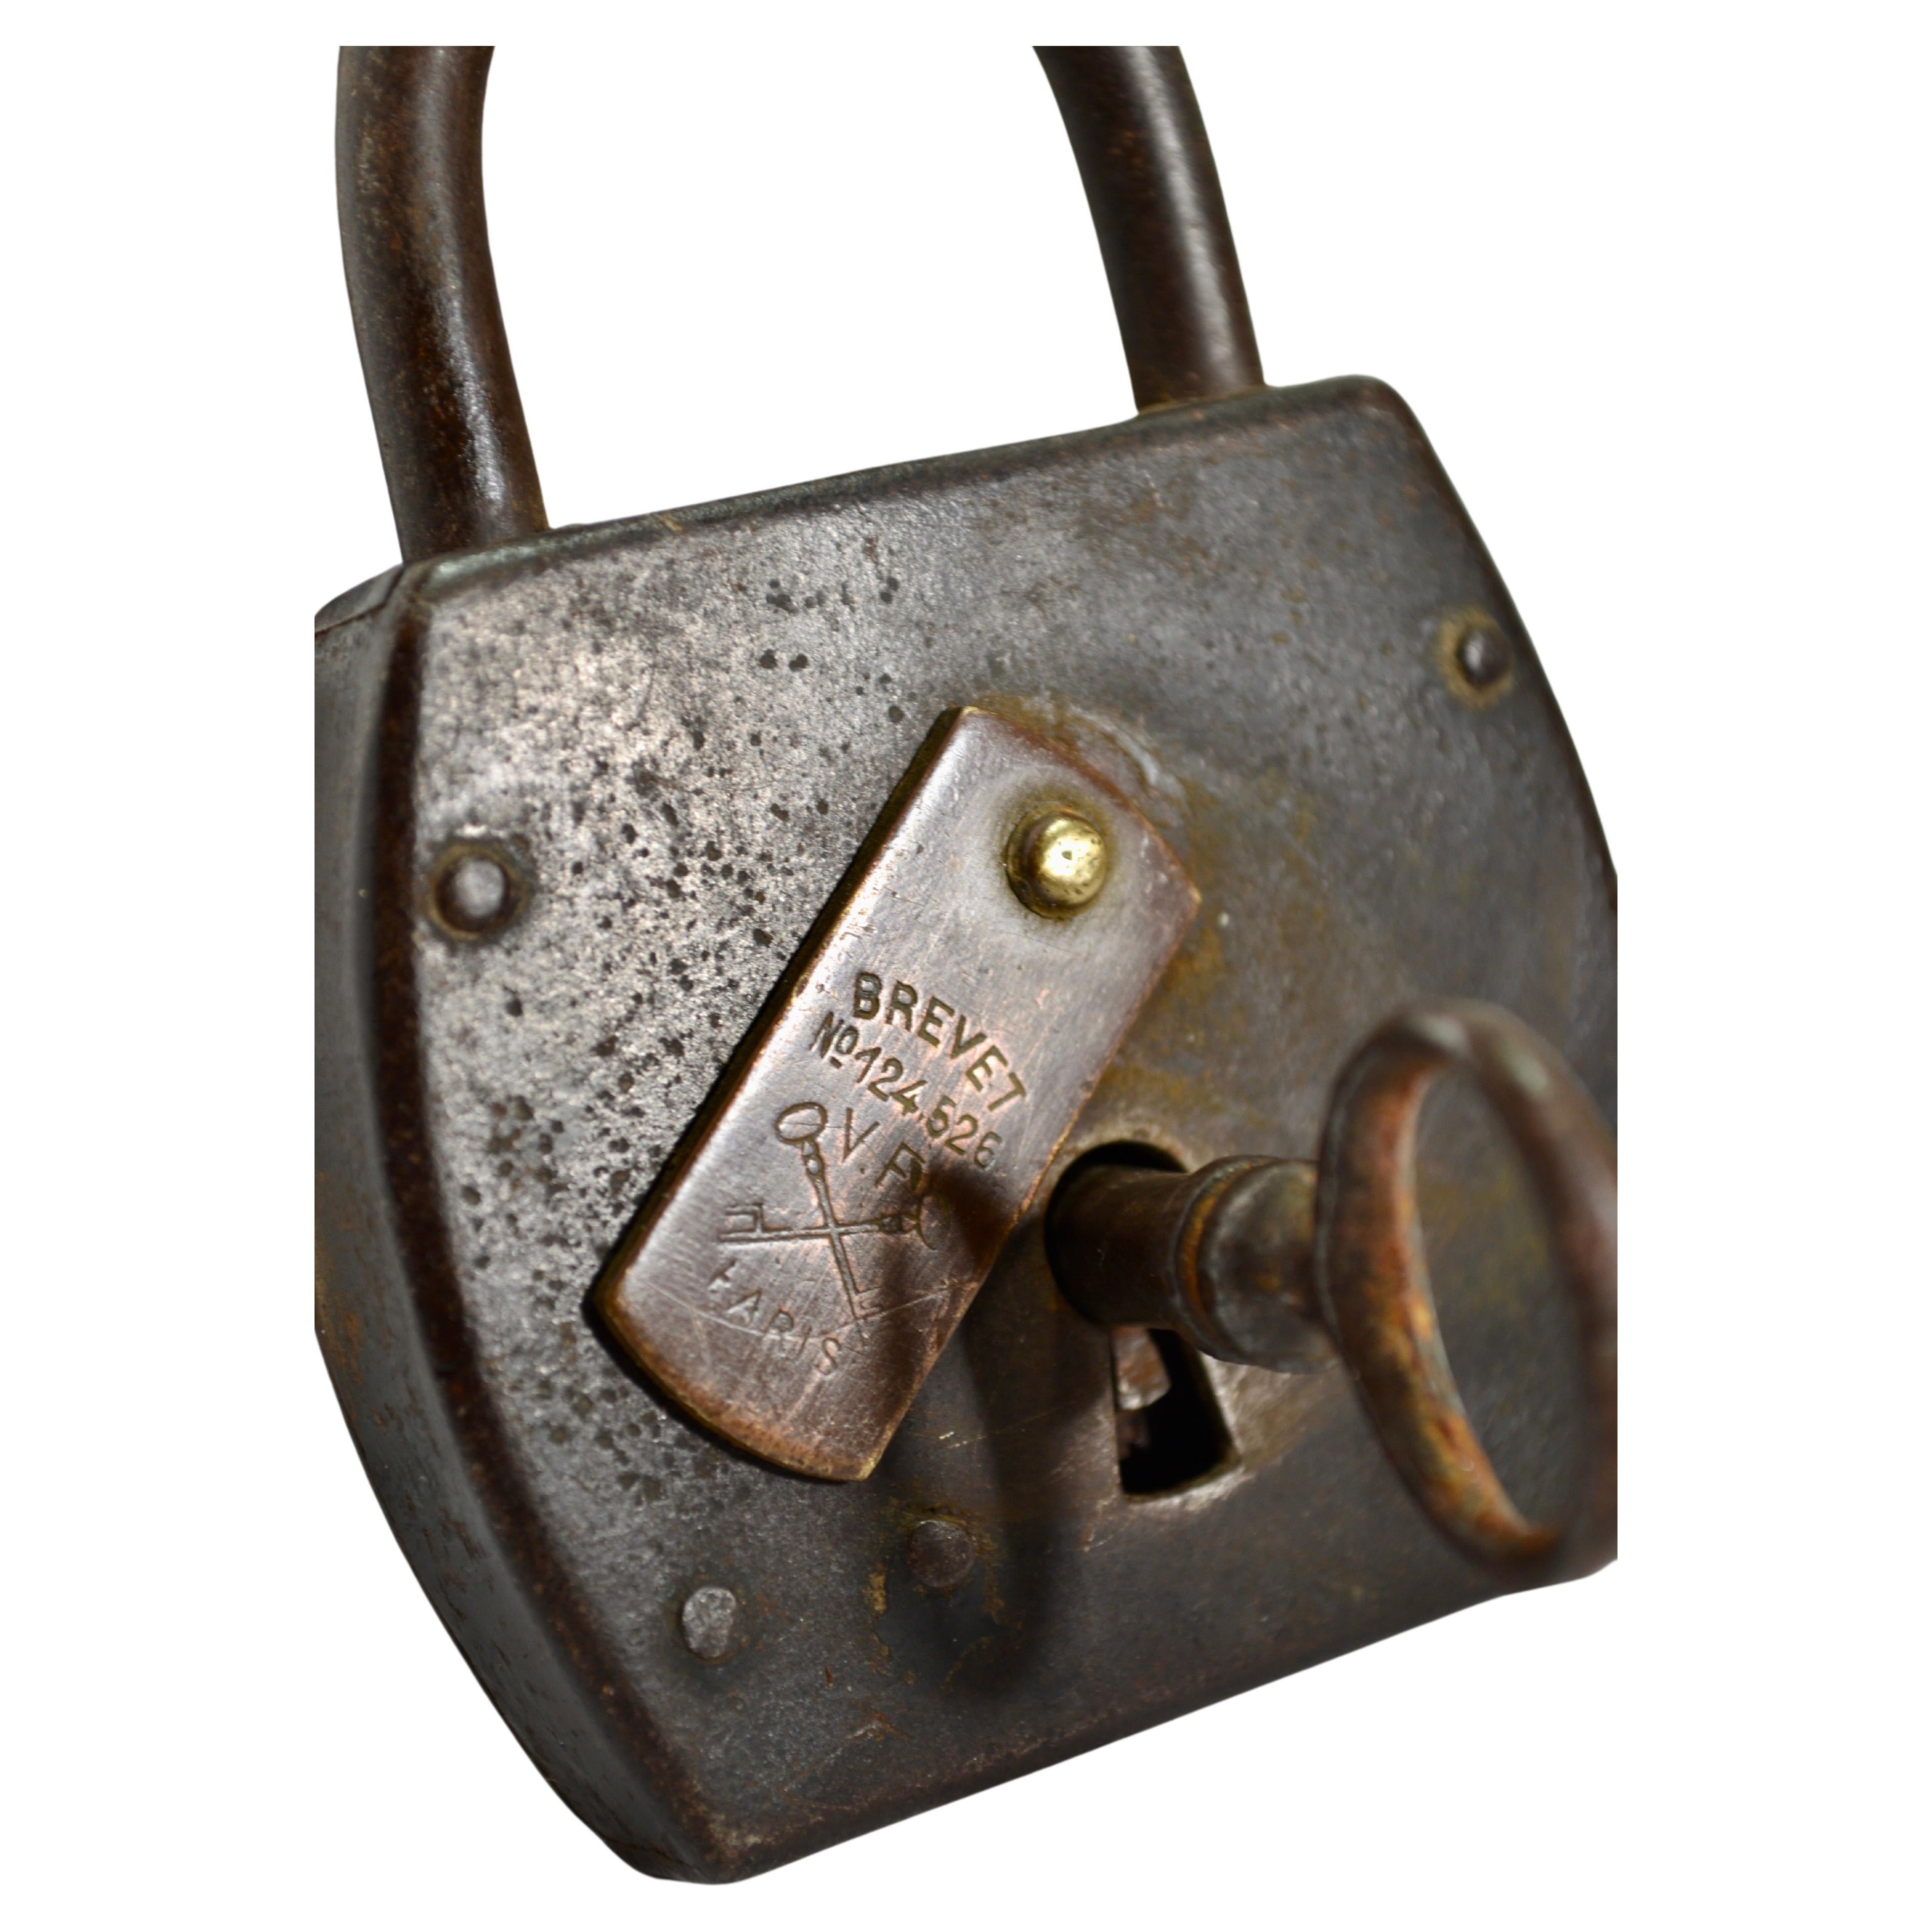 Antique large padlock accompanied by its original functional skeleton key.





